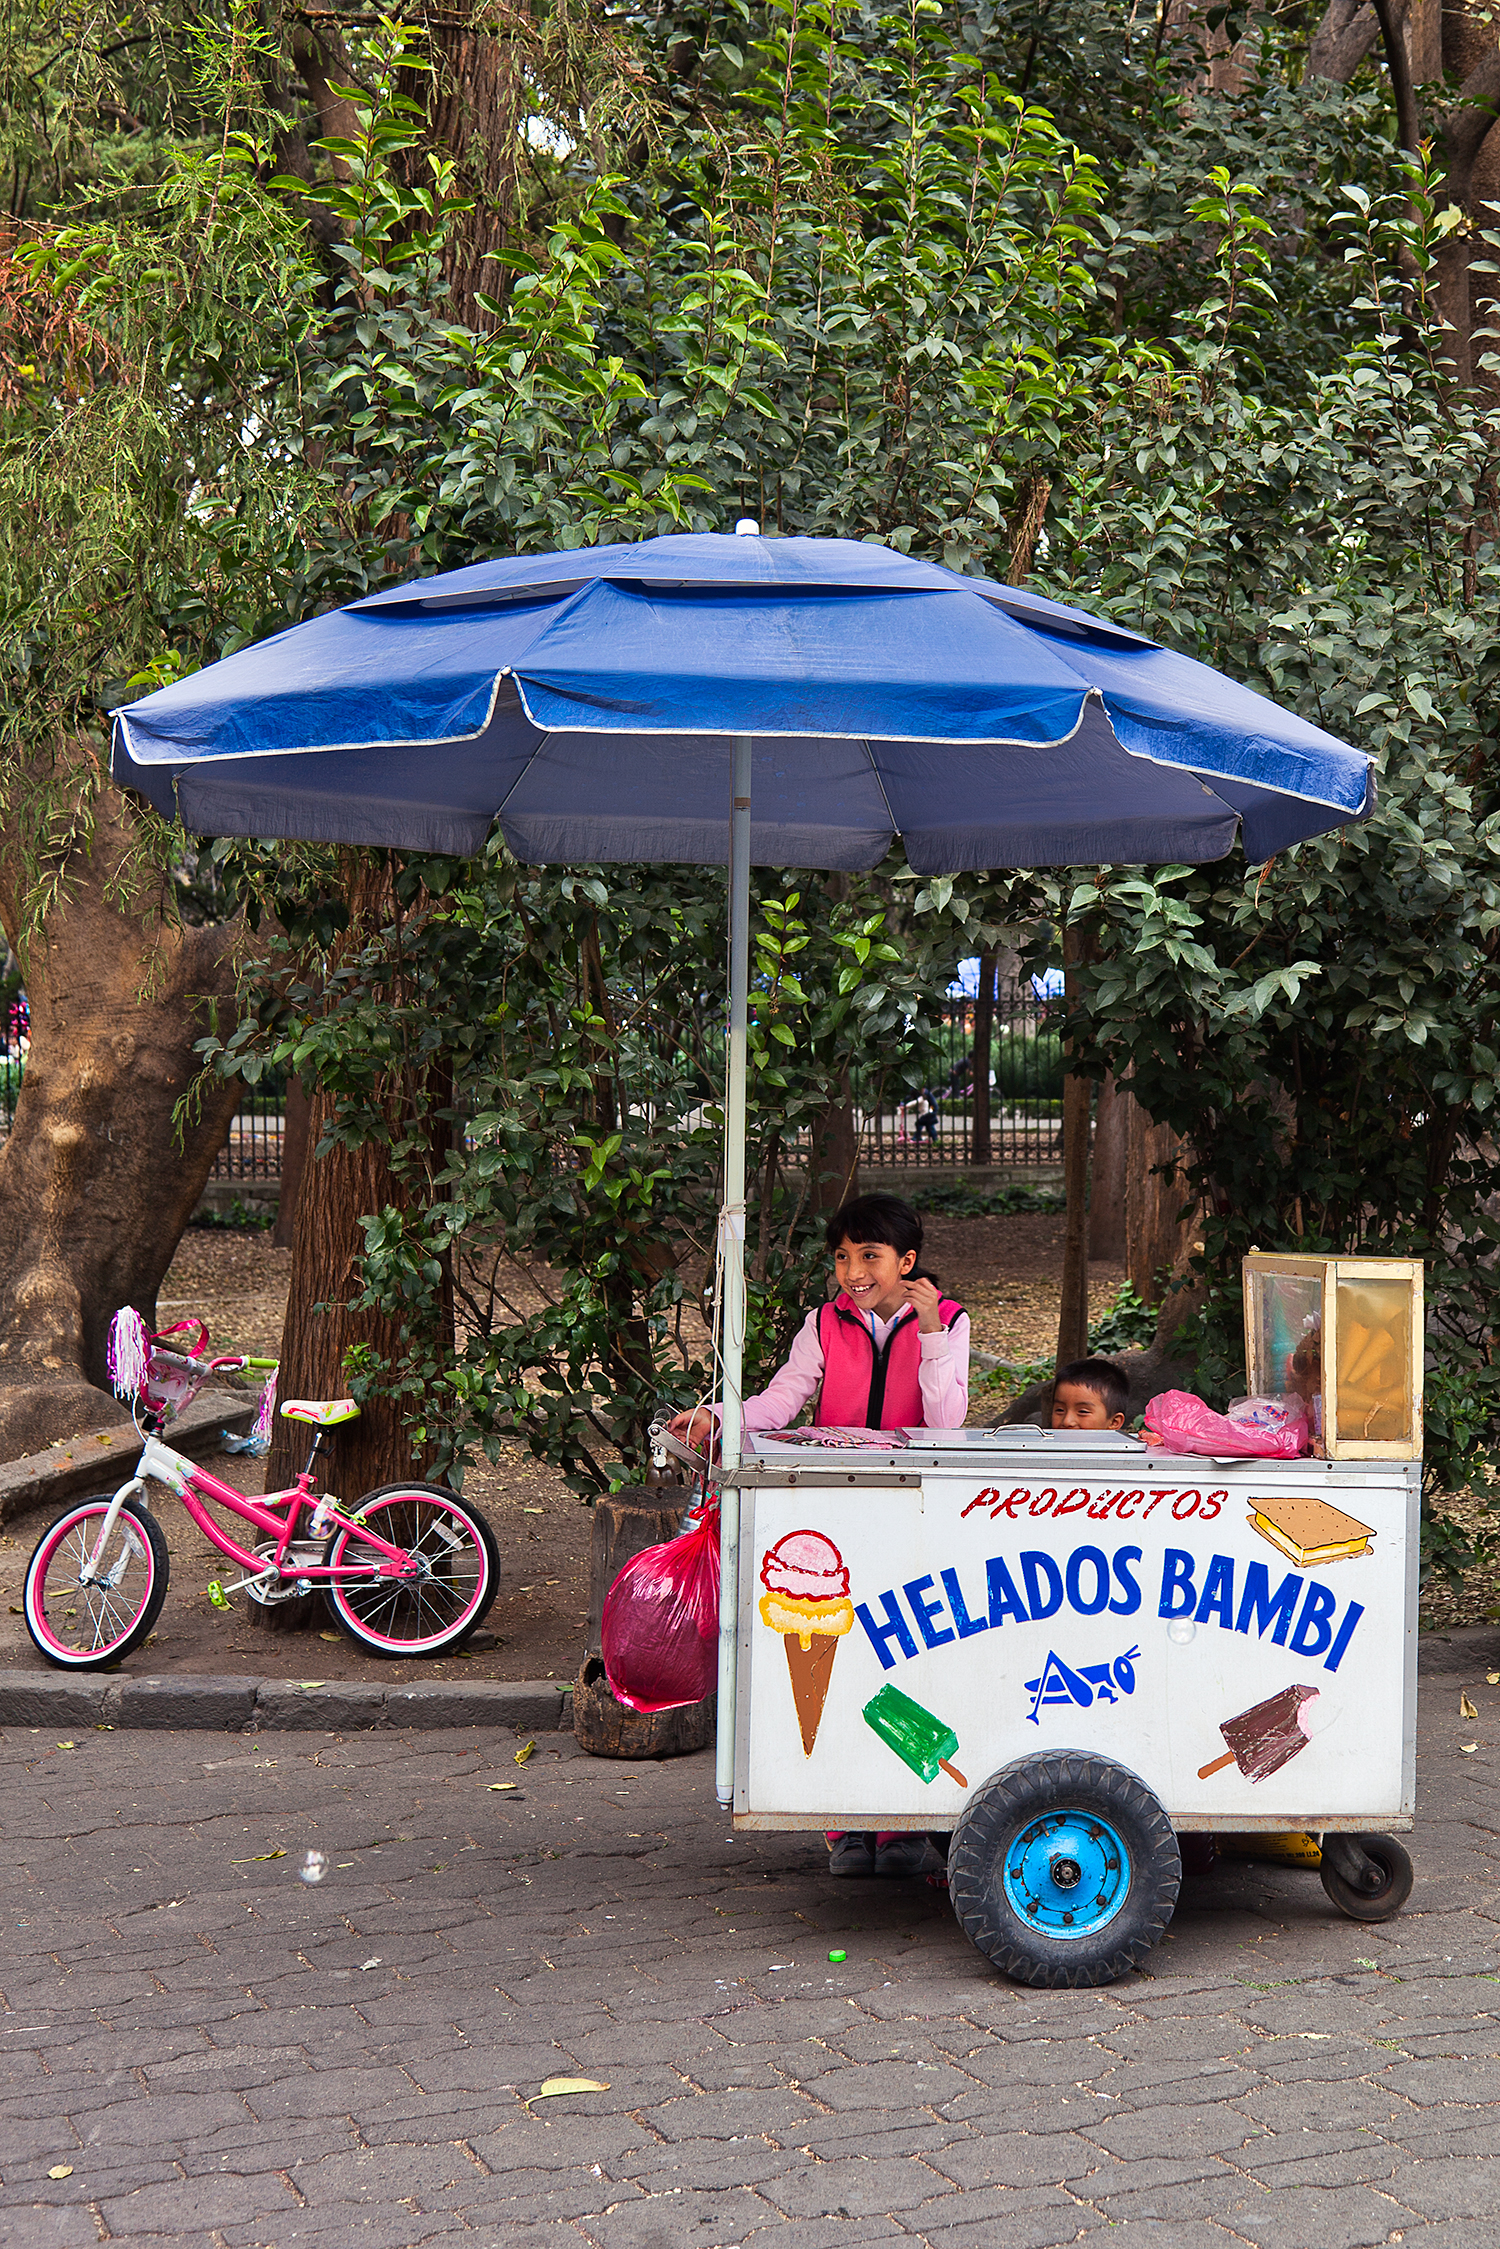 productos helados bambi chapultepec park mexico city mx.jpg